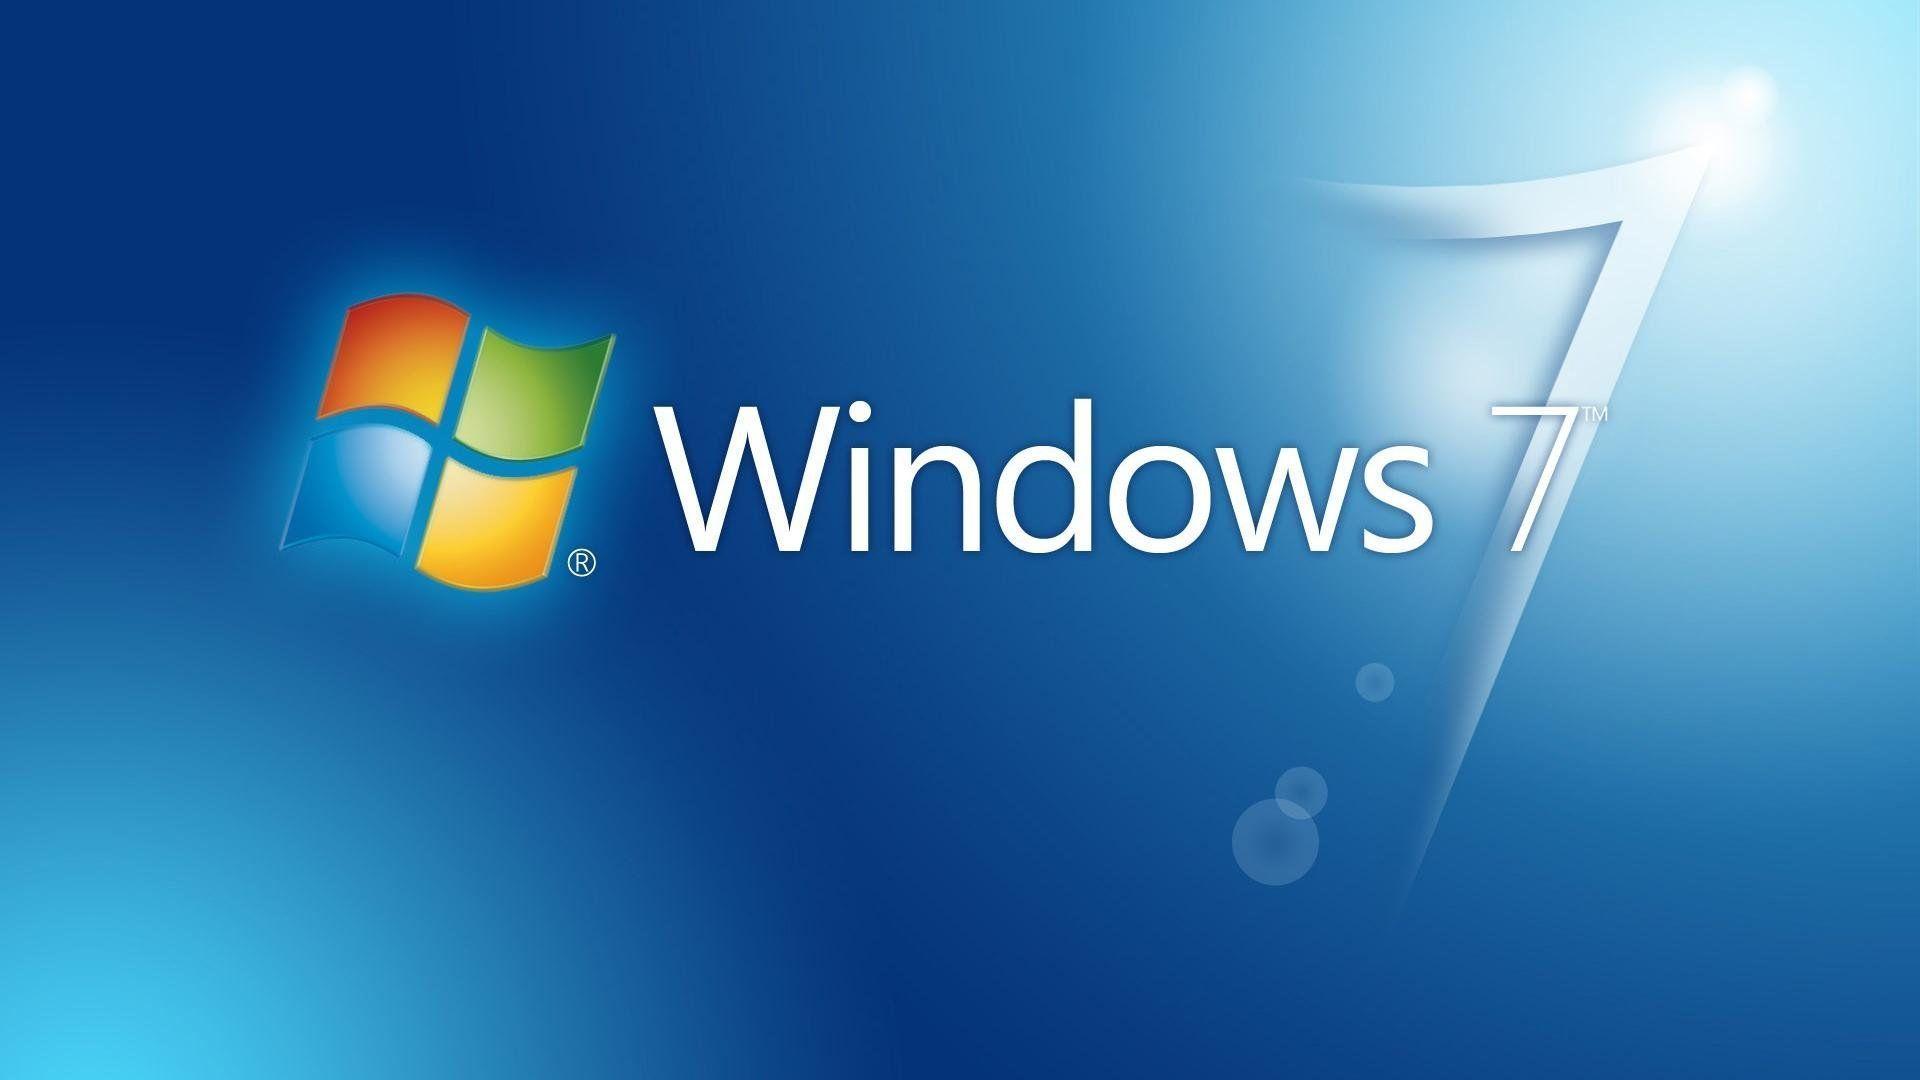 Windows 7 HD Wallpaper Download Free for PC Desktop